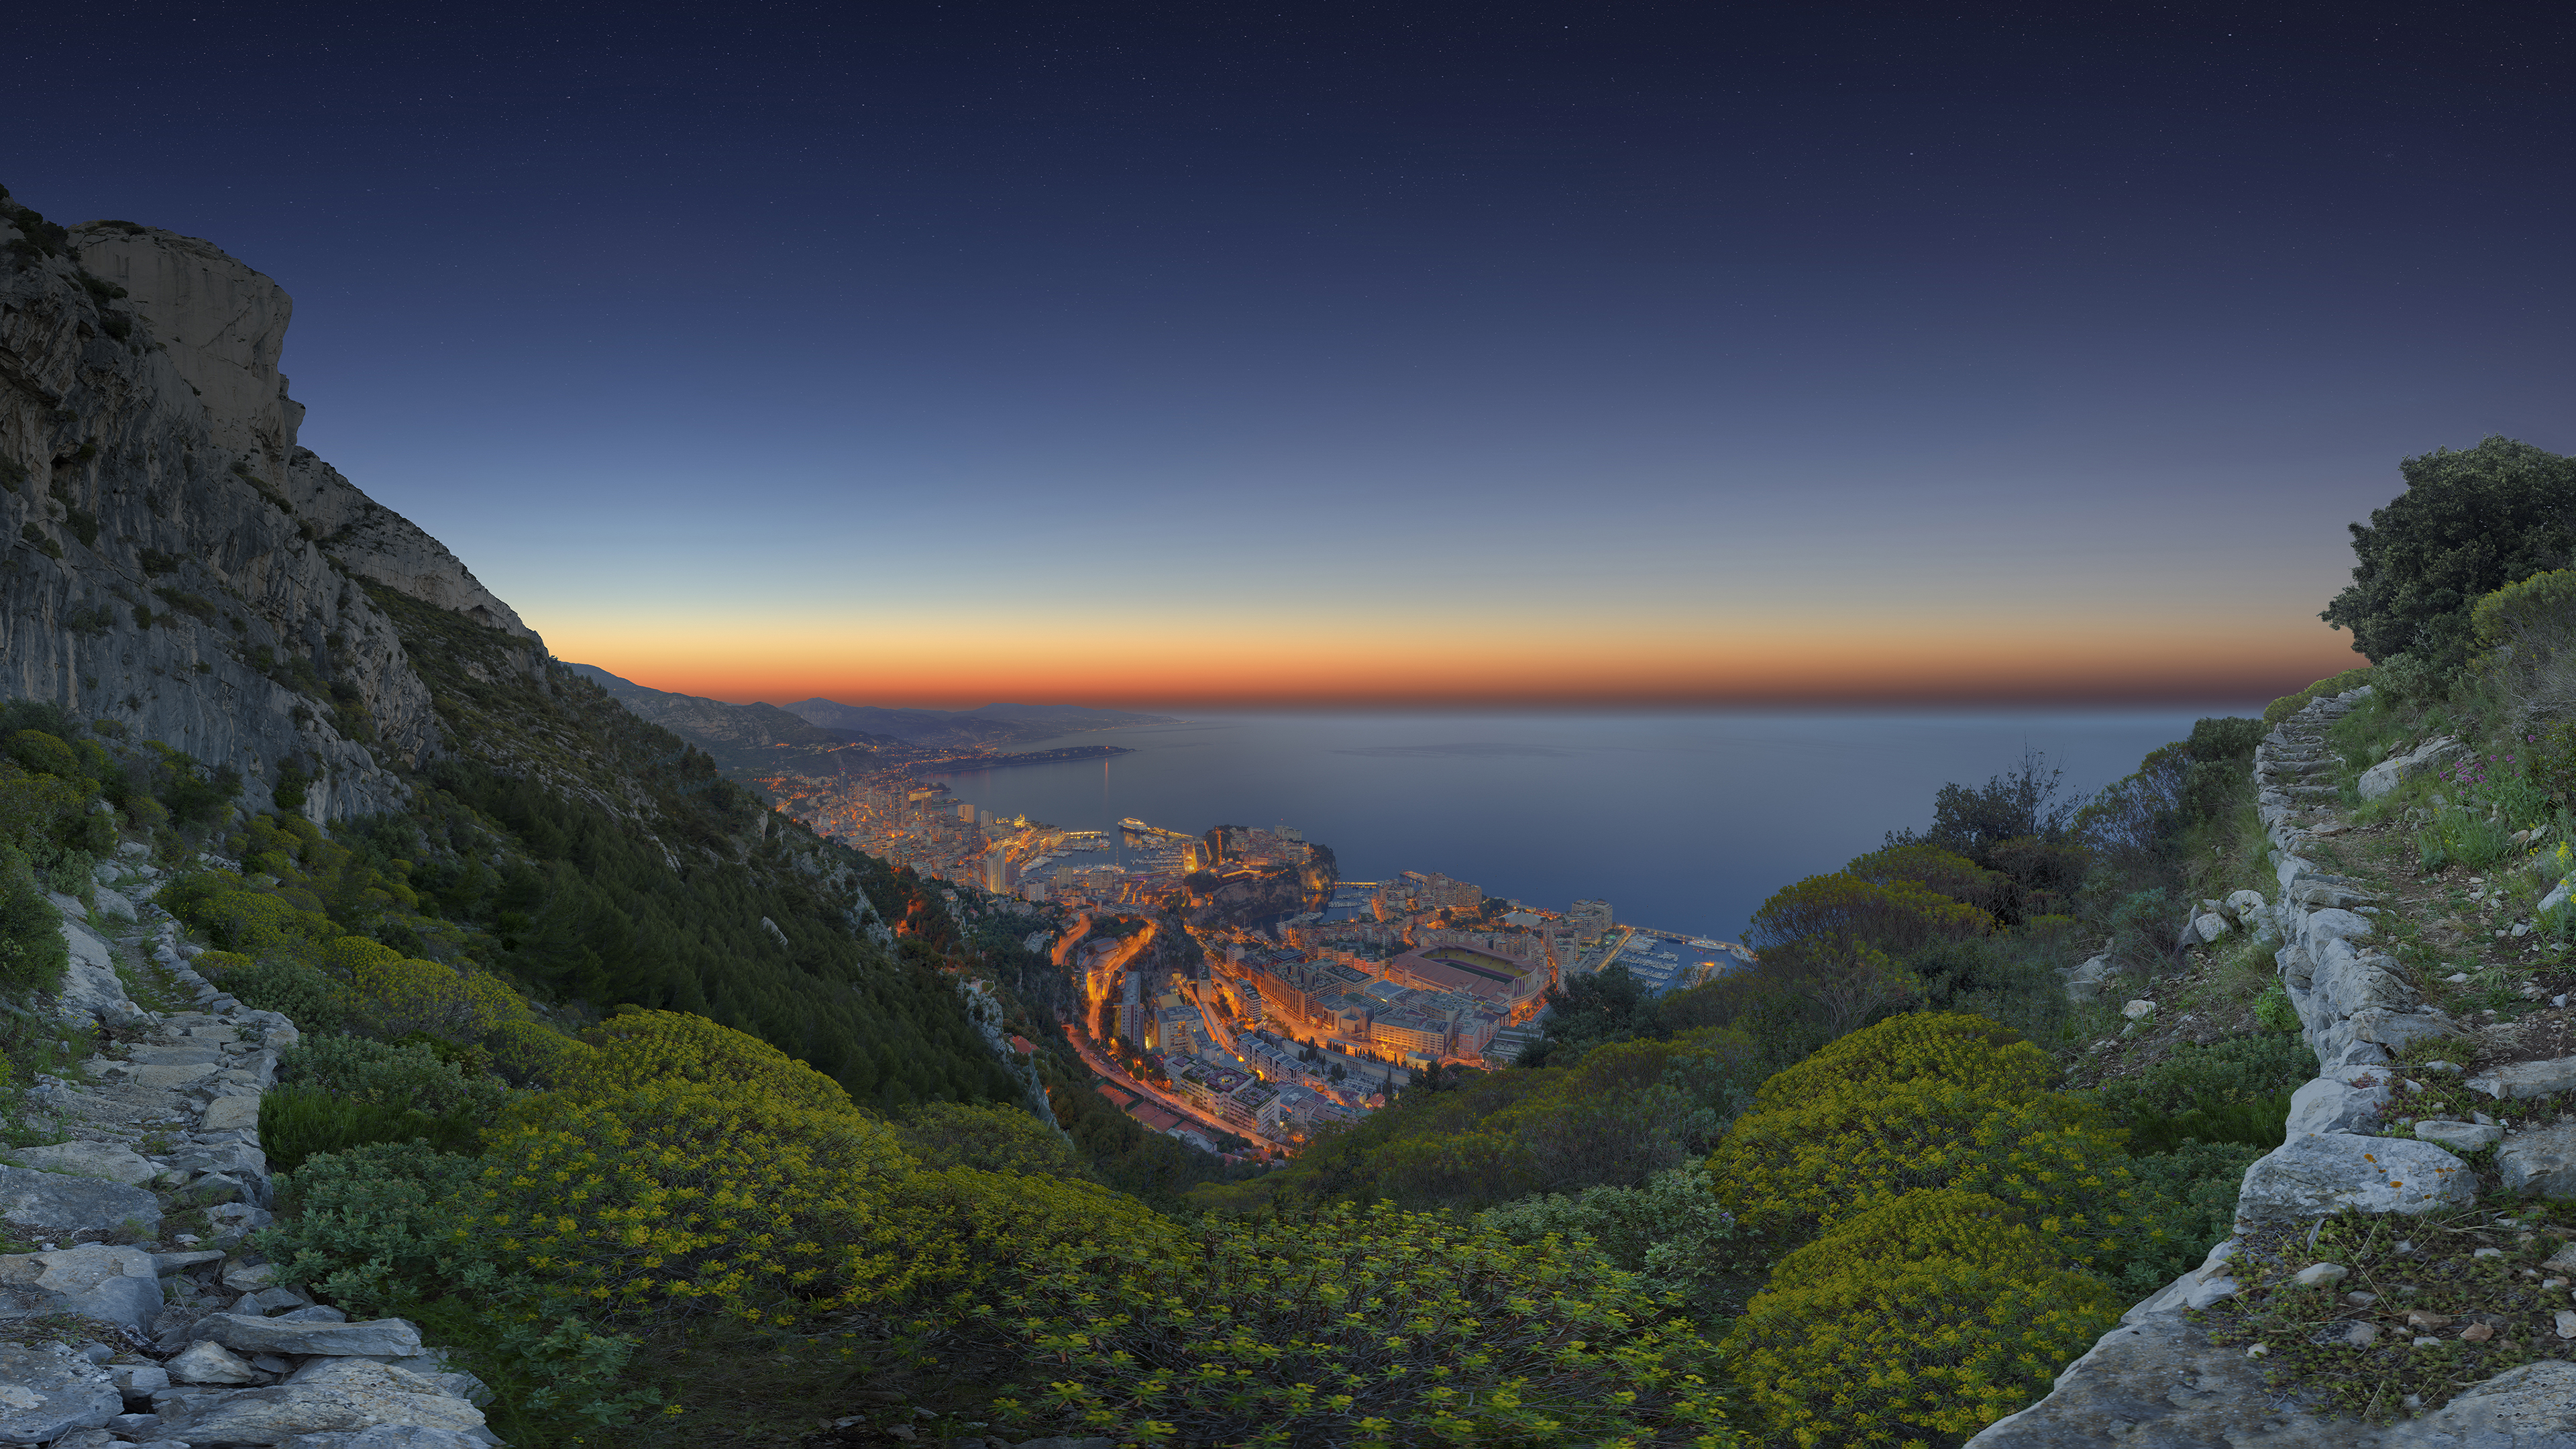 Monaco 4k Ultra HD Wallpaper | Background Image ...